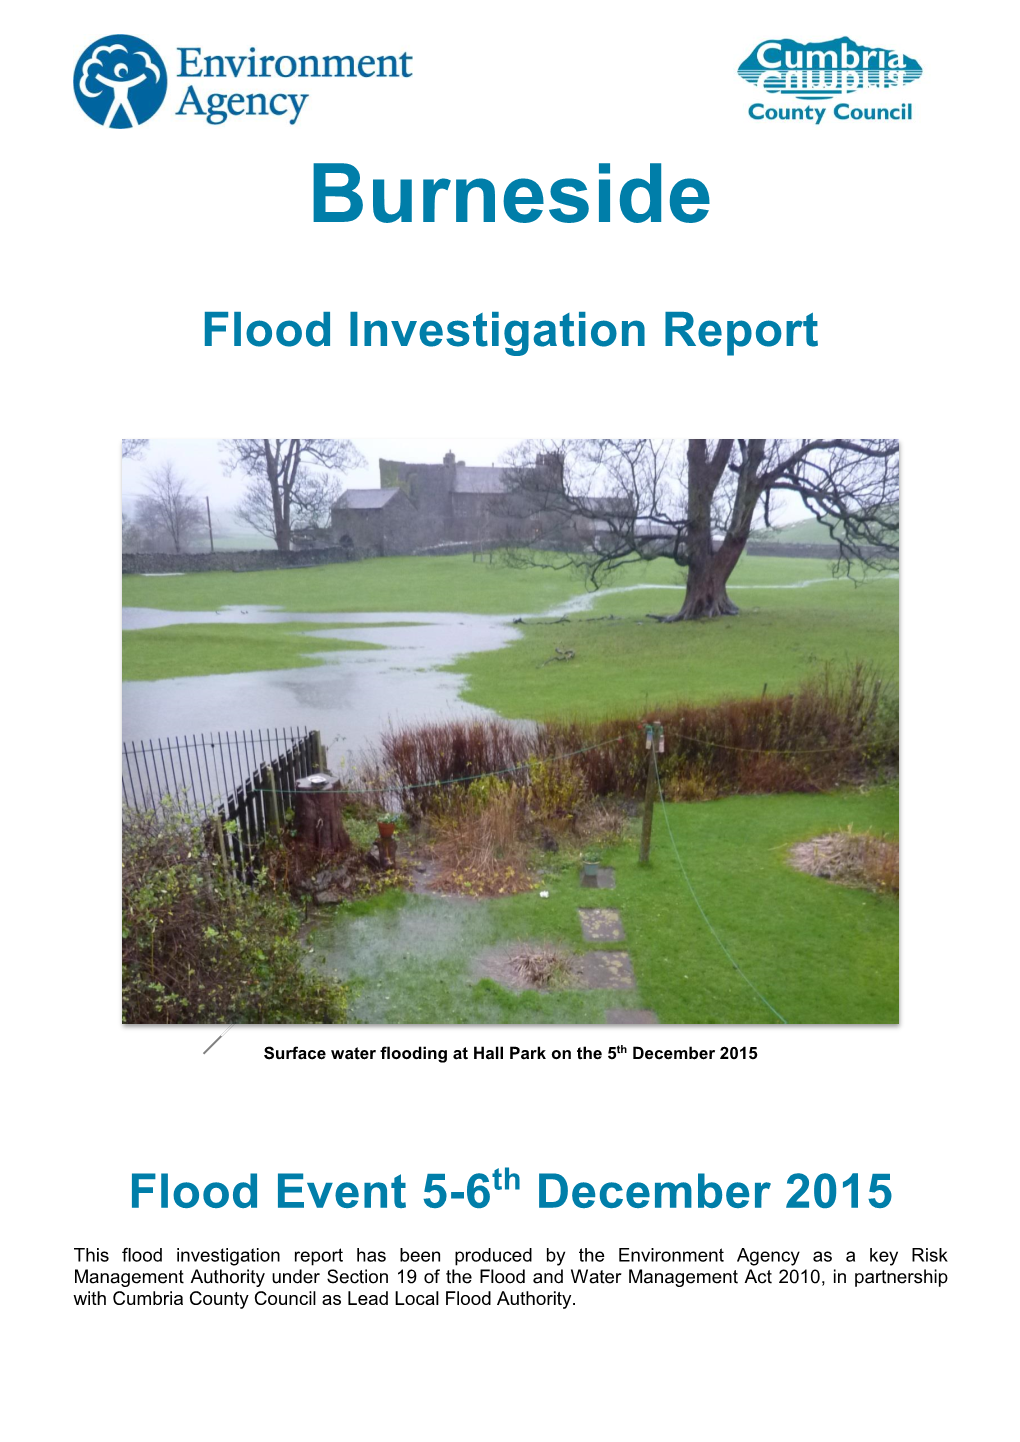 Burneside Draft Flood Investigation Report